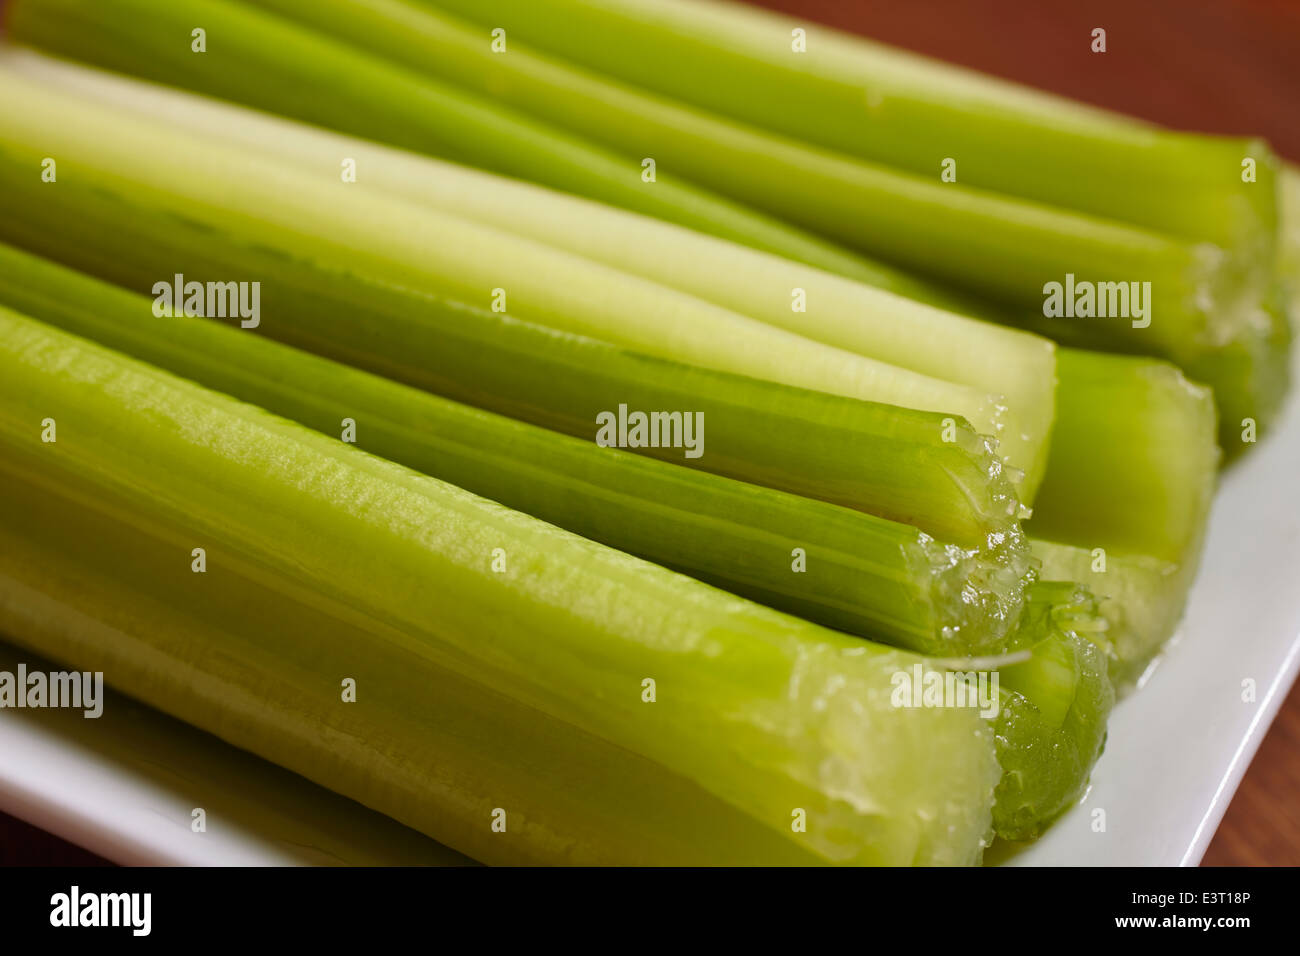 dish of celery stalks Stock Photo